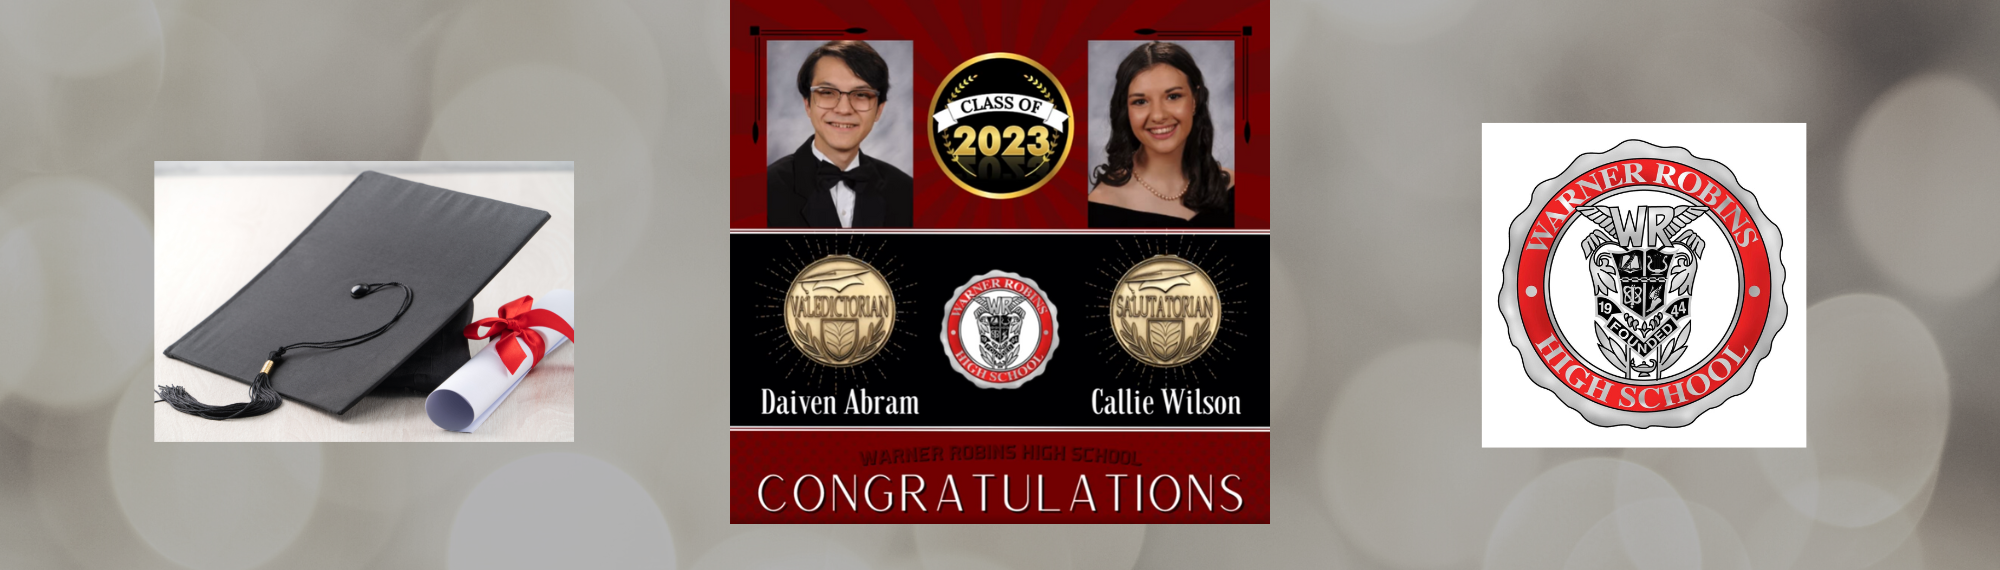 Congratulations to our 2023 Valedictorian and Salutatorian!